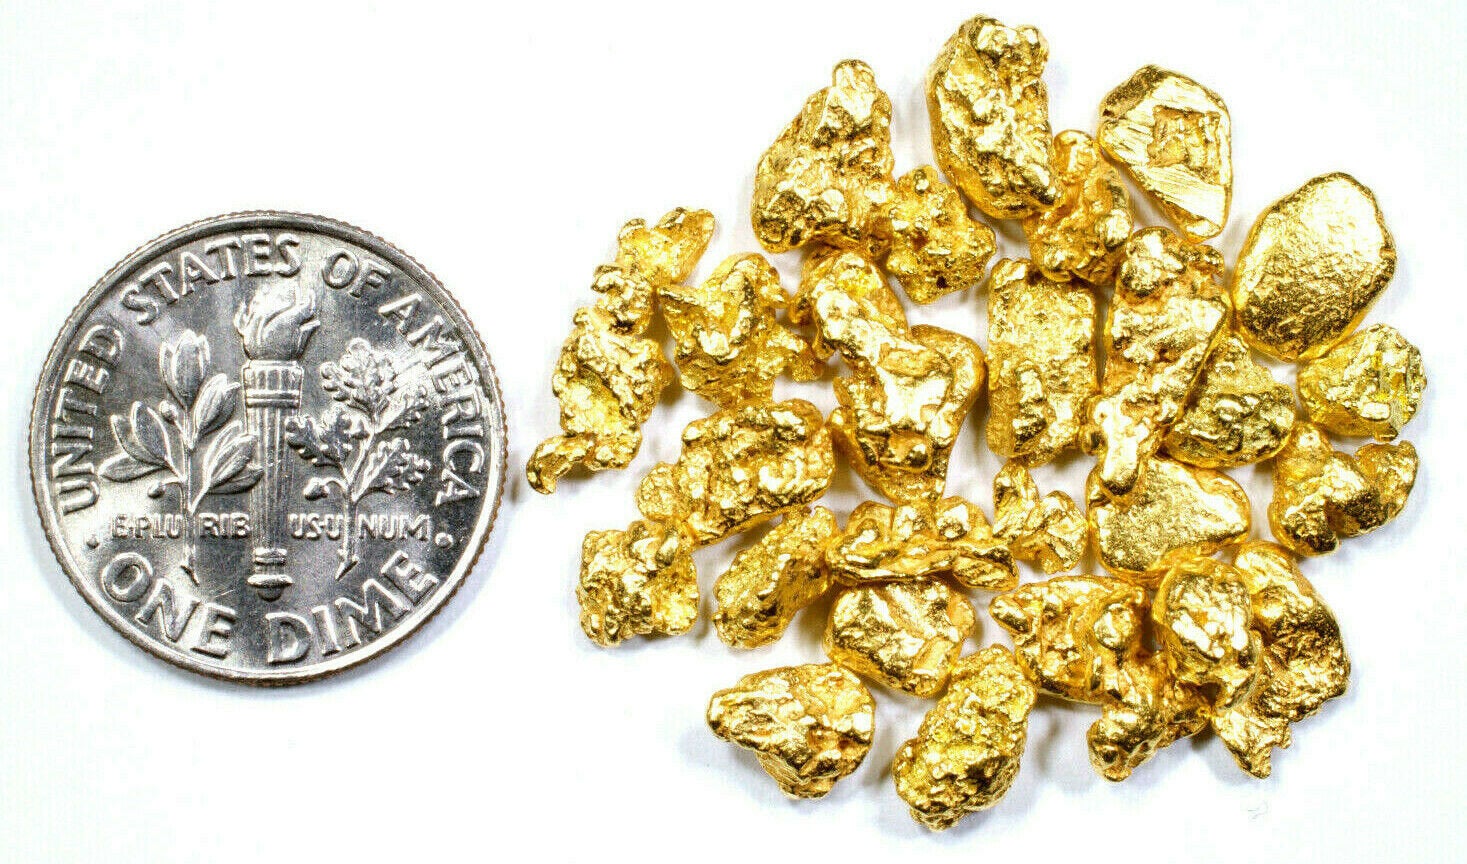 2.000 GRAMS ALASKAN YUKON BC NATURAL PURE GOLD NUGGETS #6 MESH WITH BOTTLE (#B600) - Liquidbullion